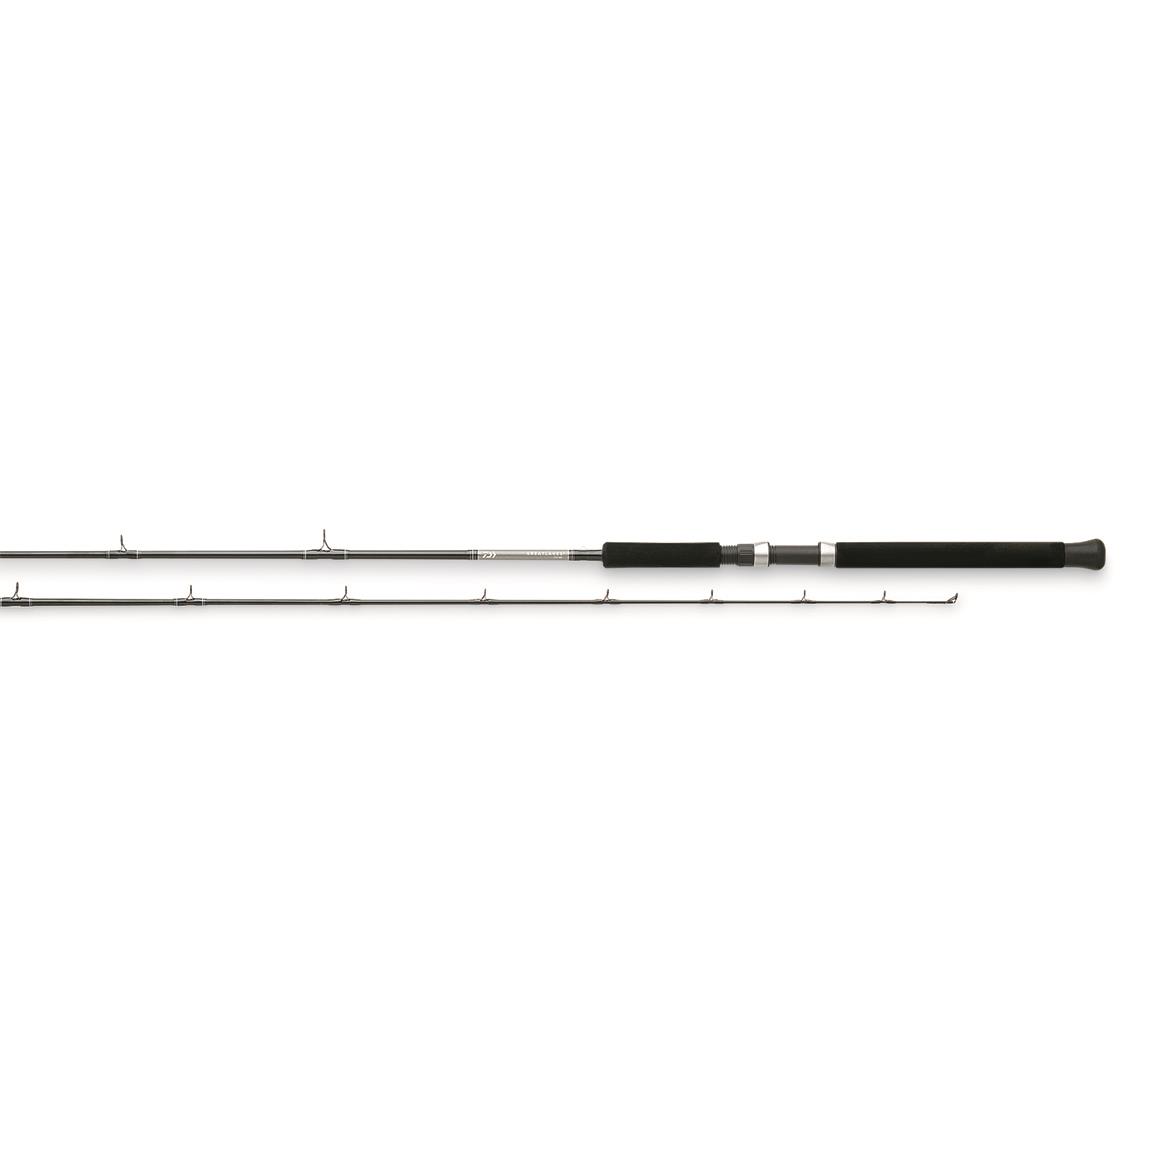 Daiwa Great Lakes Walleye Telescoping Trolling Rod, 8'6 Length, Medium Power, Fast Action